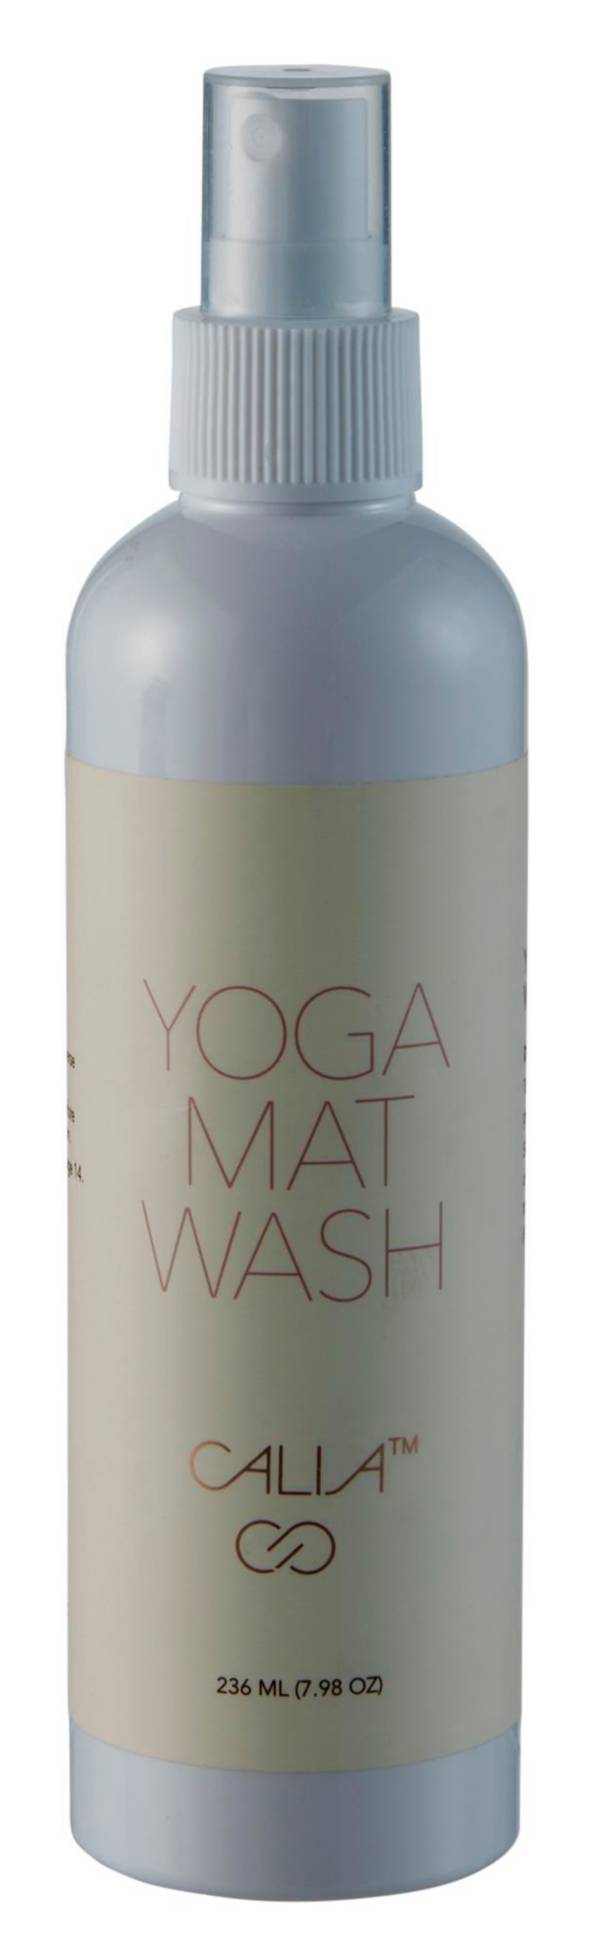 CALIA Yoga Mat Wash – 7.98 oz. product image